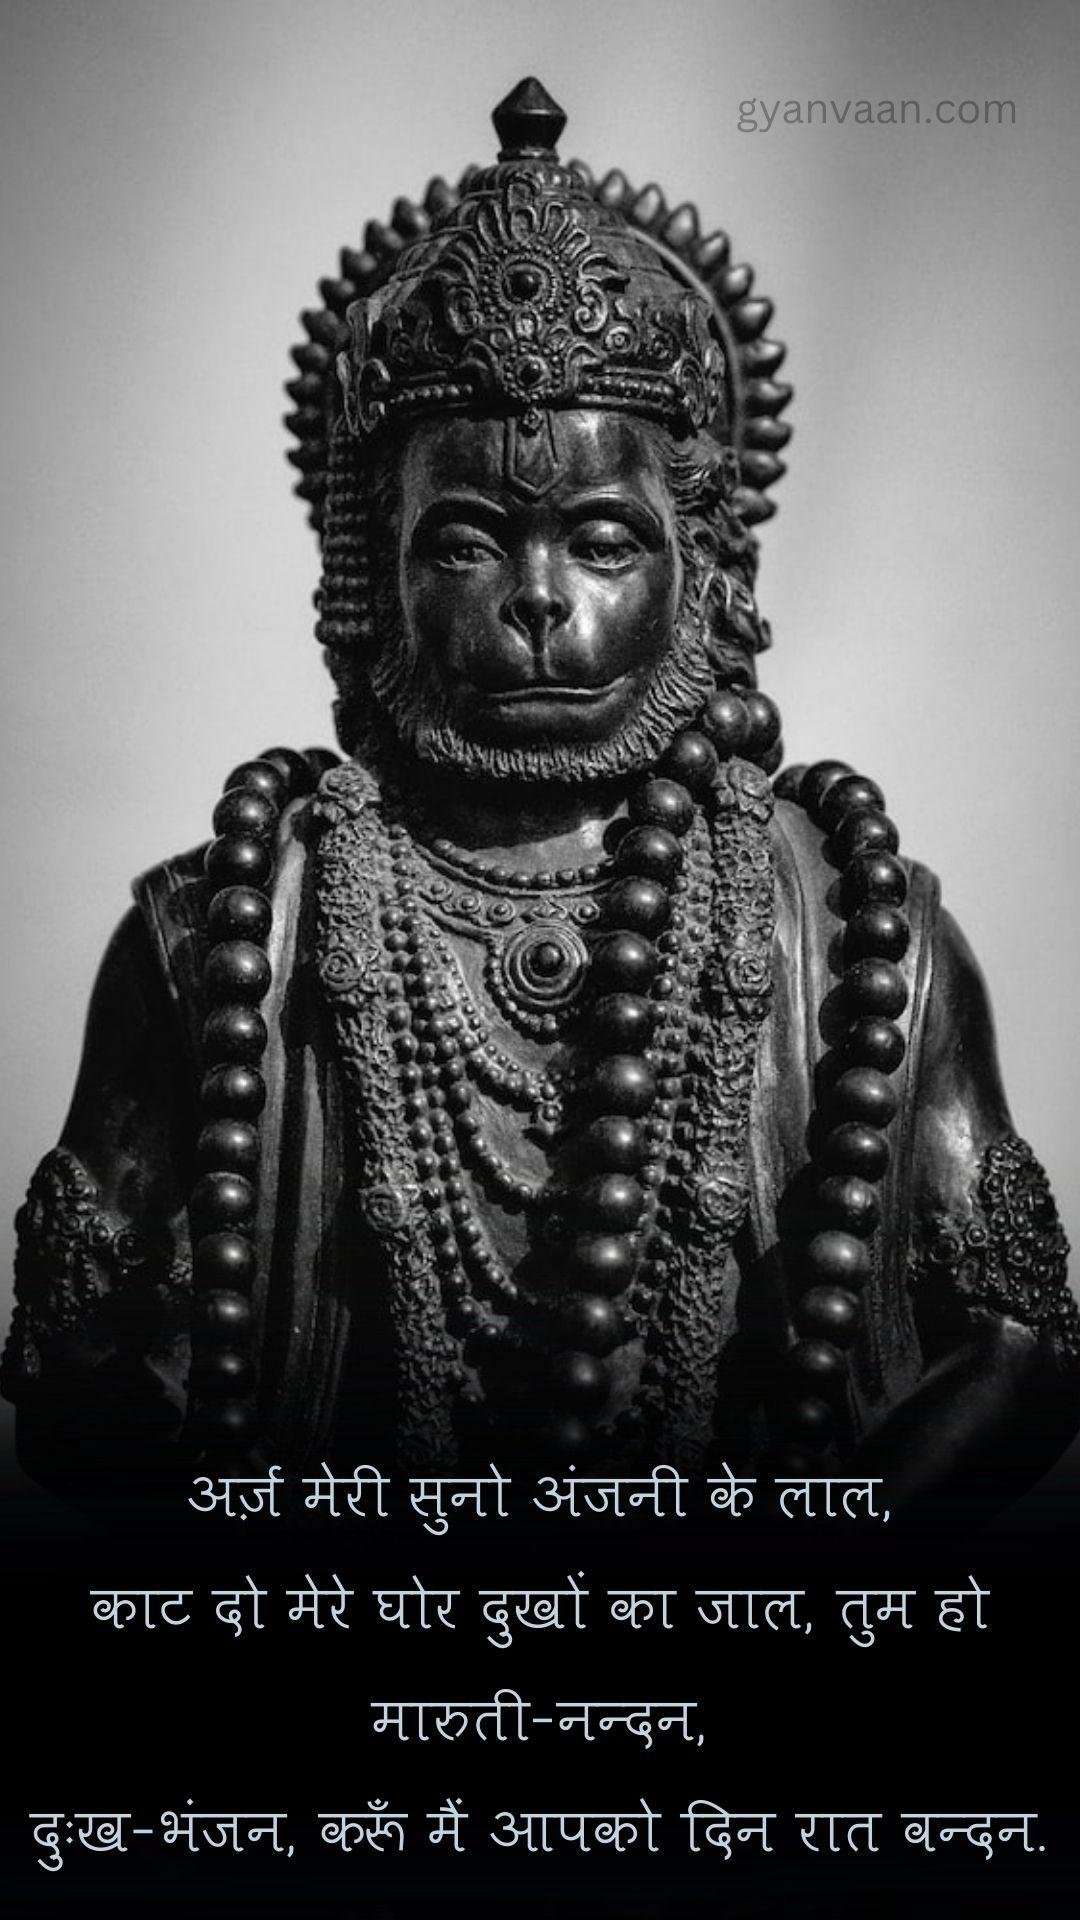 Hanuman Quotes Shayari And Whatsapp Status For Mobile With Hanuman Images And Photos 43 - Hanuman Images